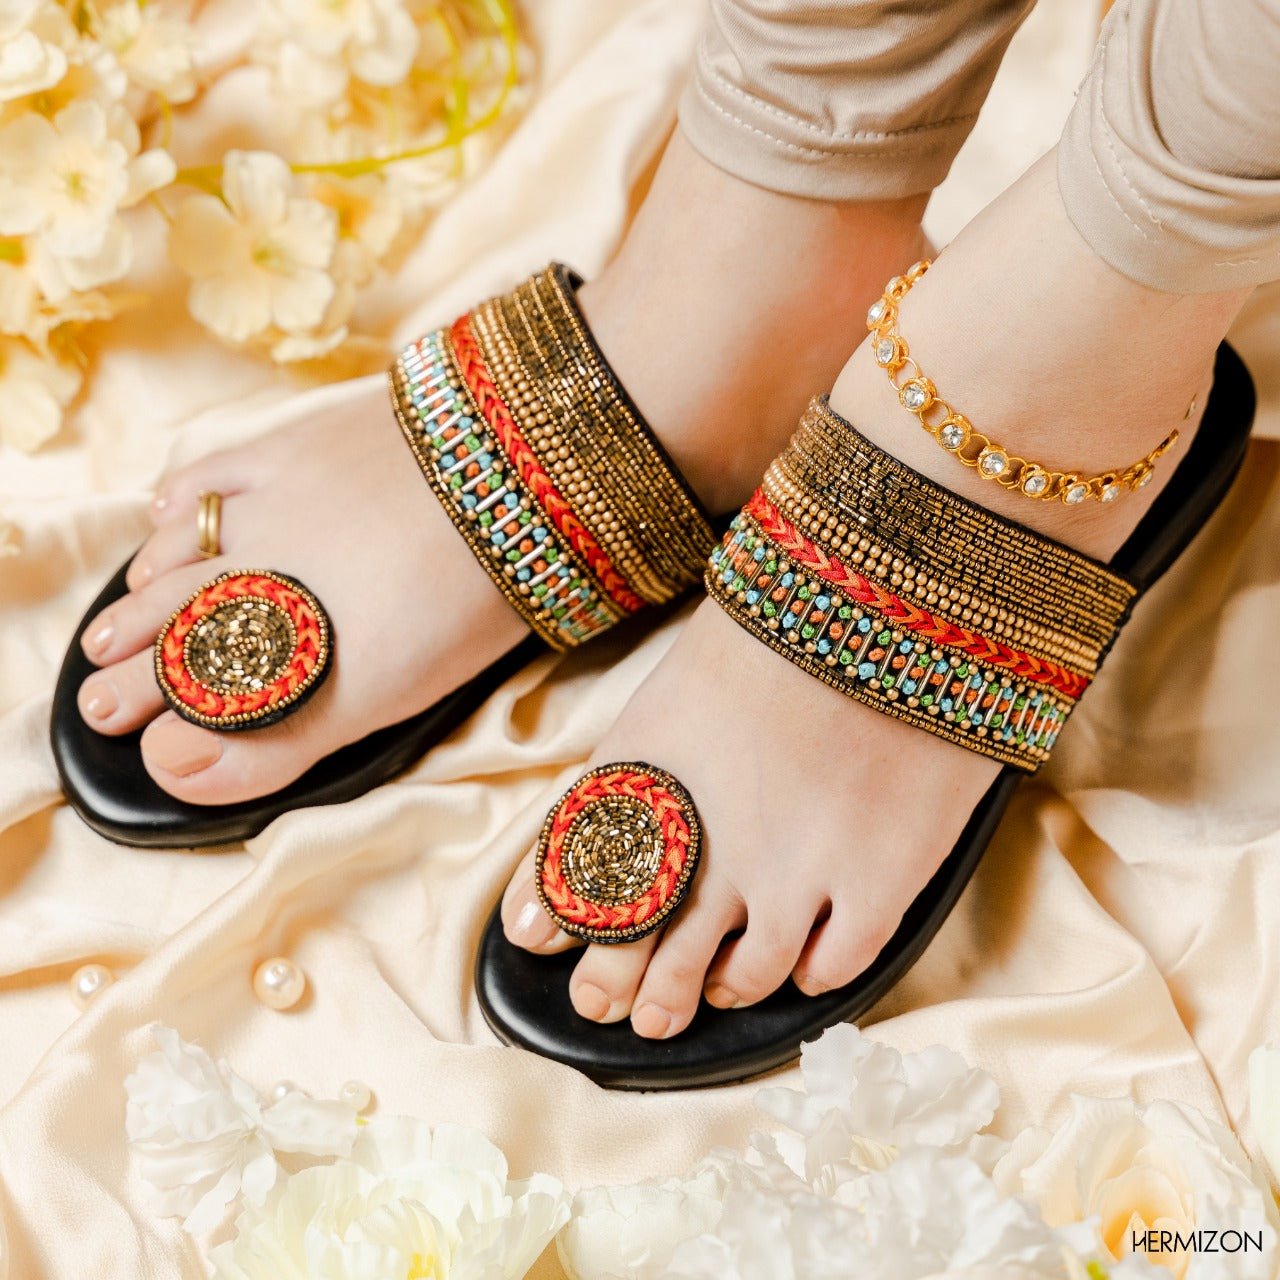 Hermizon brand sandal with traditional design.